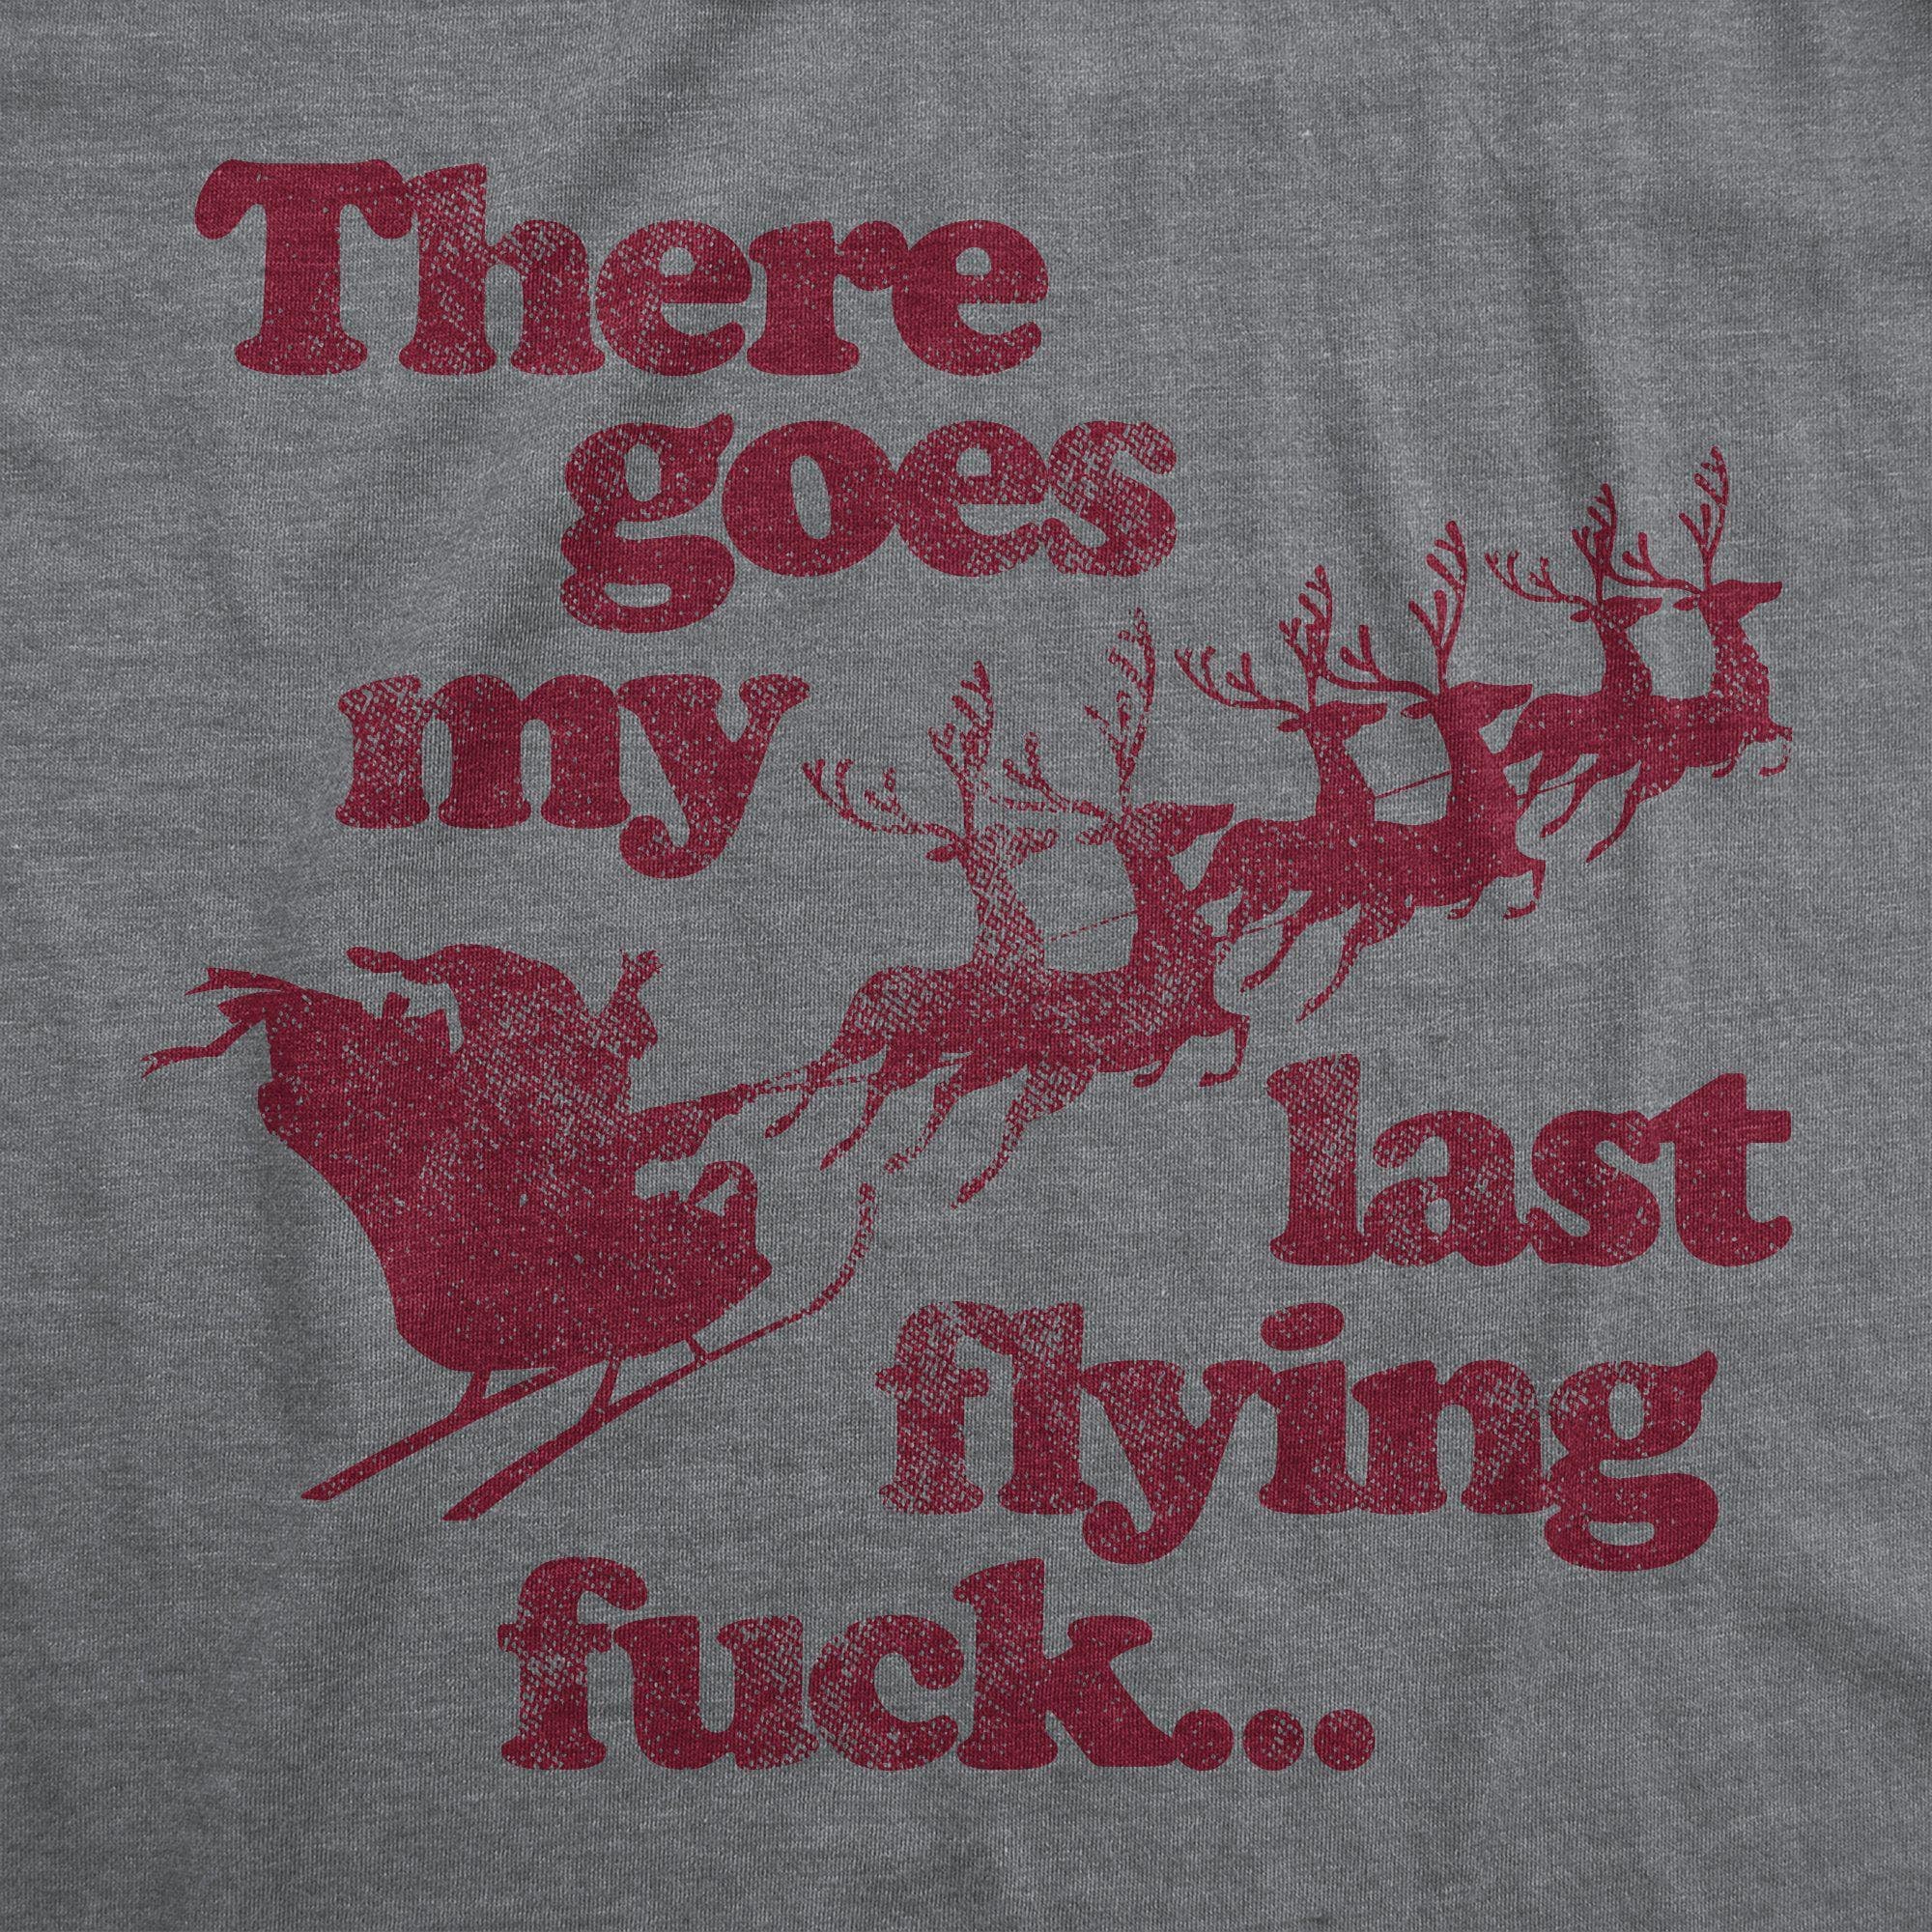 There Goes My Last Flying Fuck Santa Men's Tshirt - Crazy Dog T-Shirts